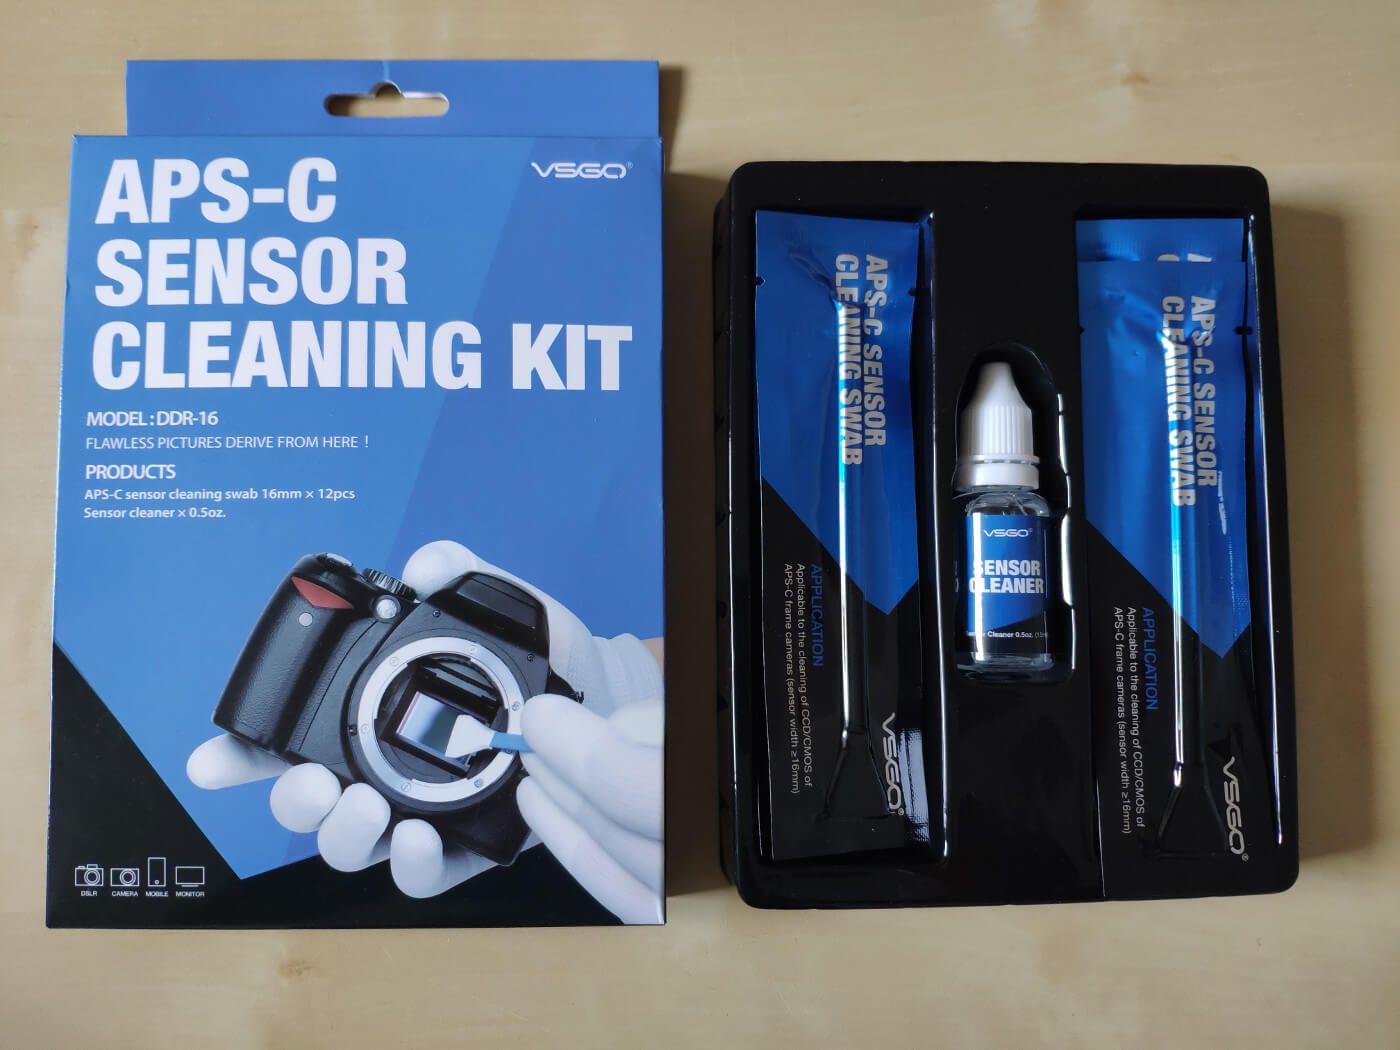 VSGO APS-C sensor cleaning kit